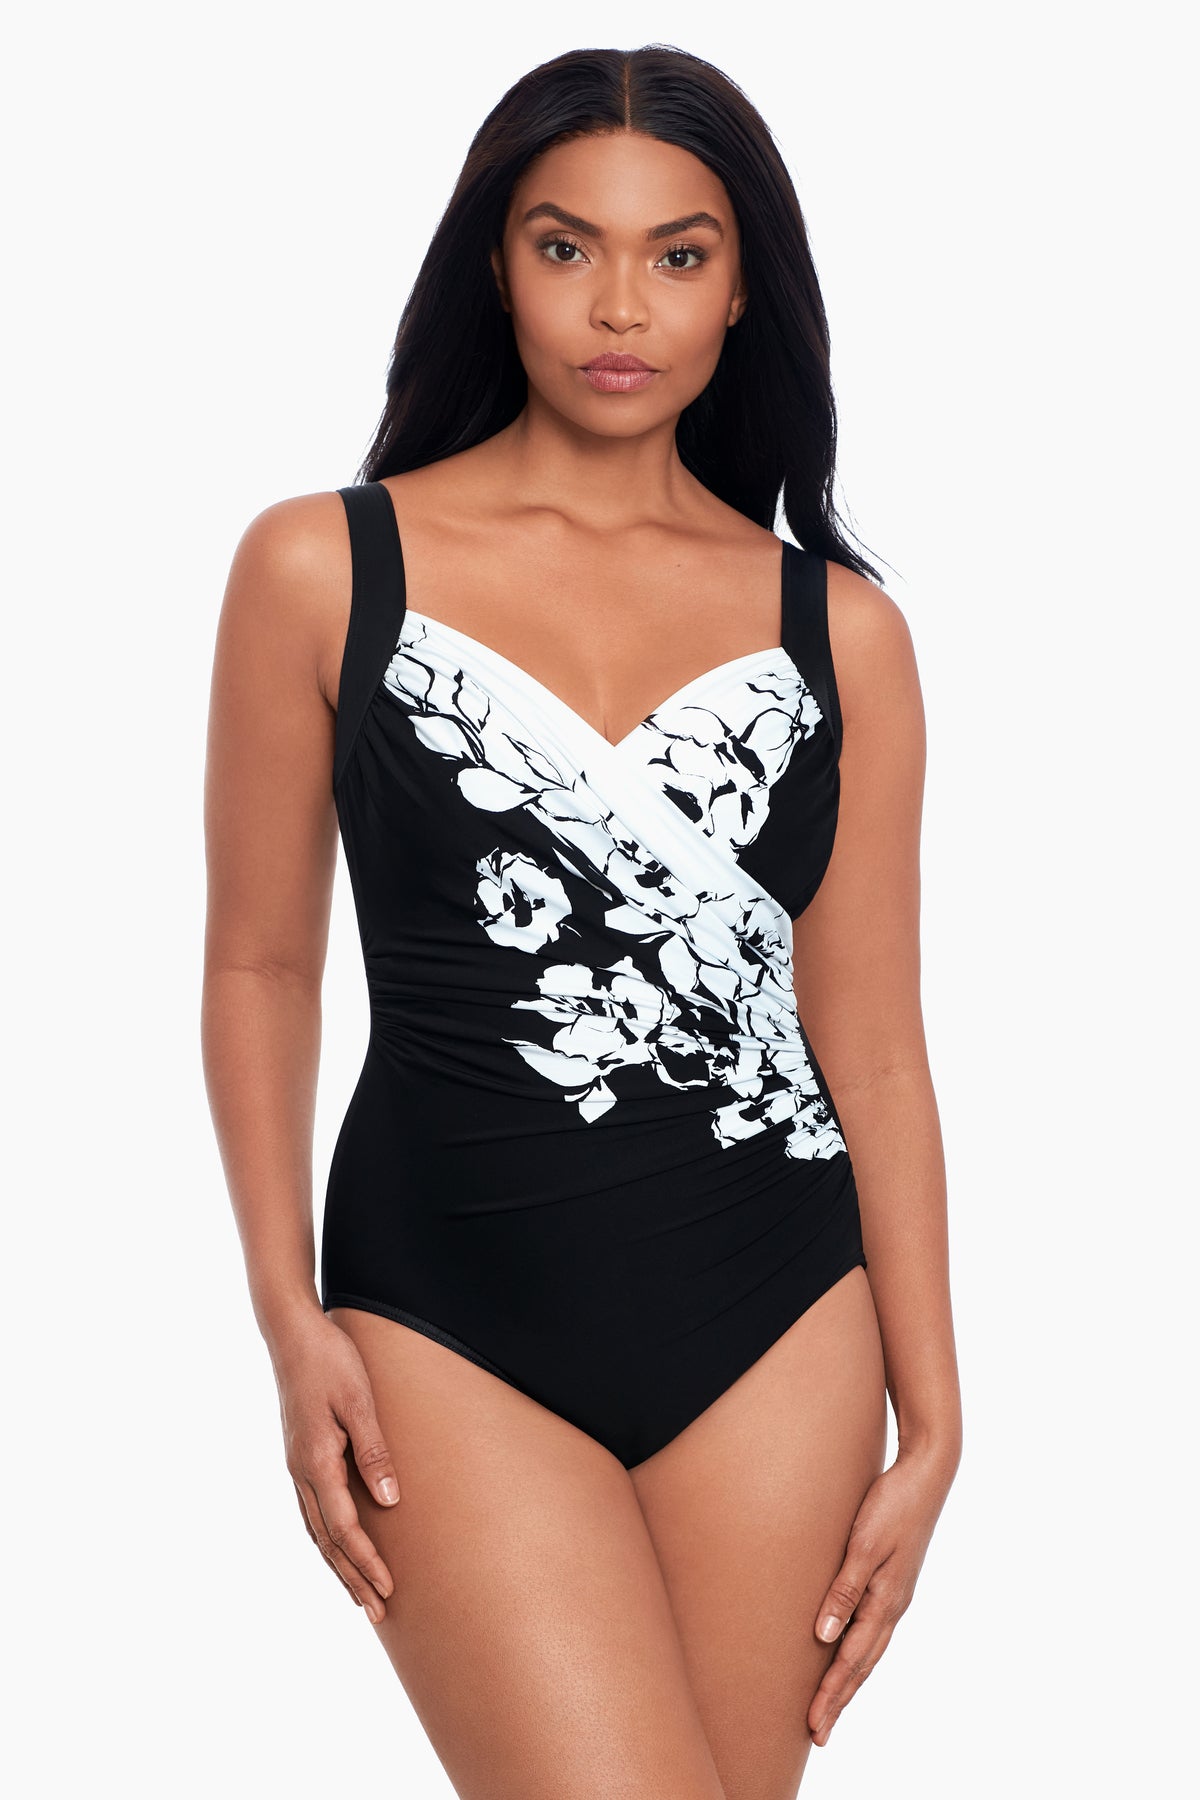 Boutique Option-Miraclesuit 1 Piece Swimsuit in Black/White color